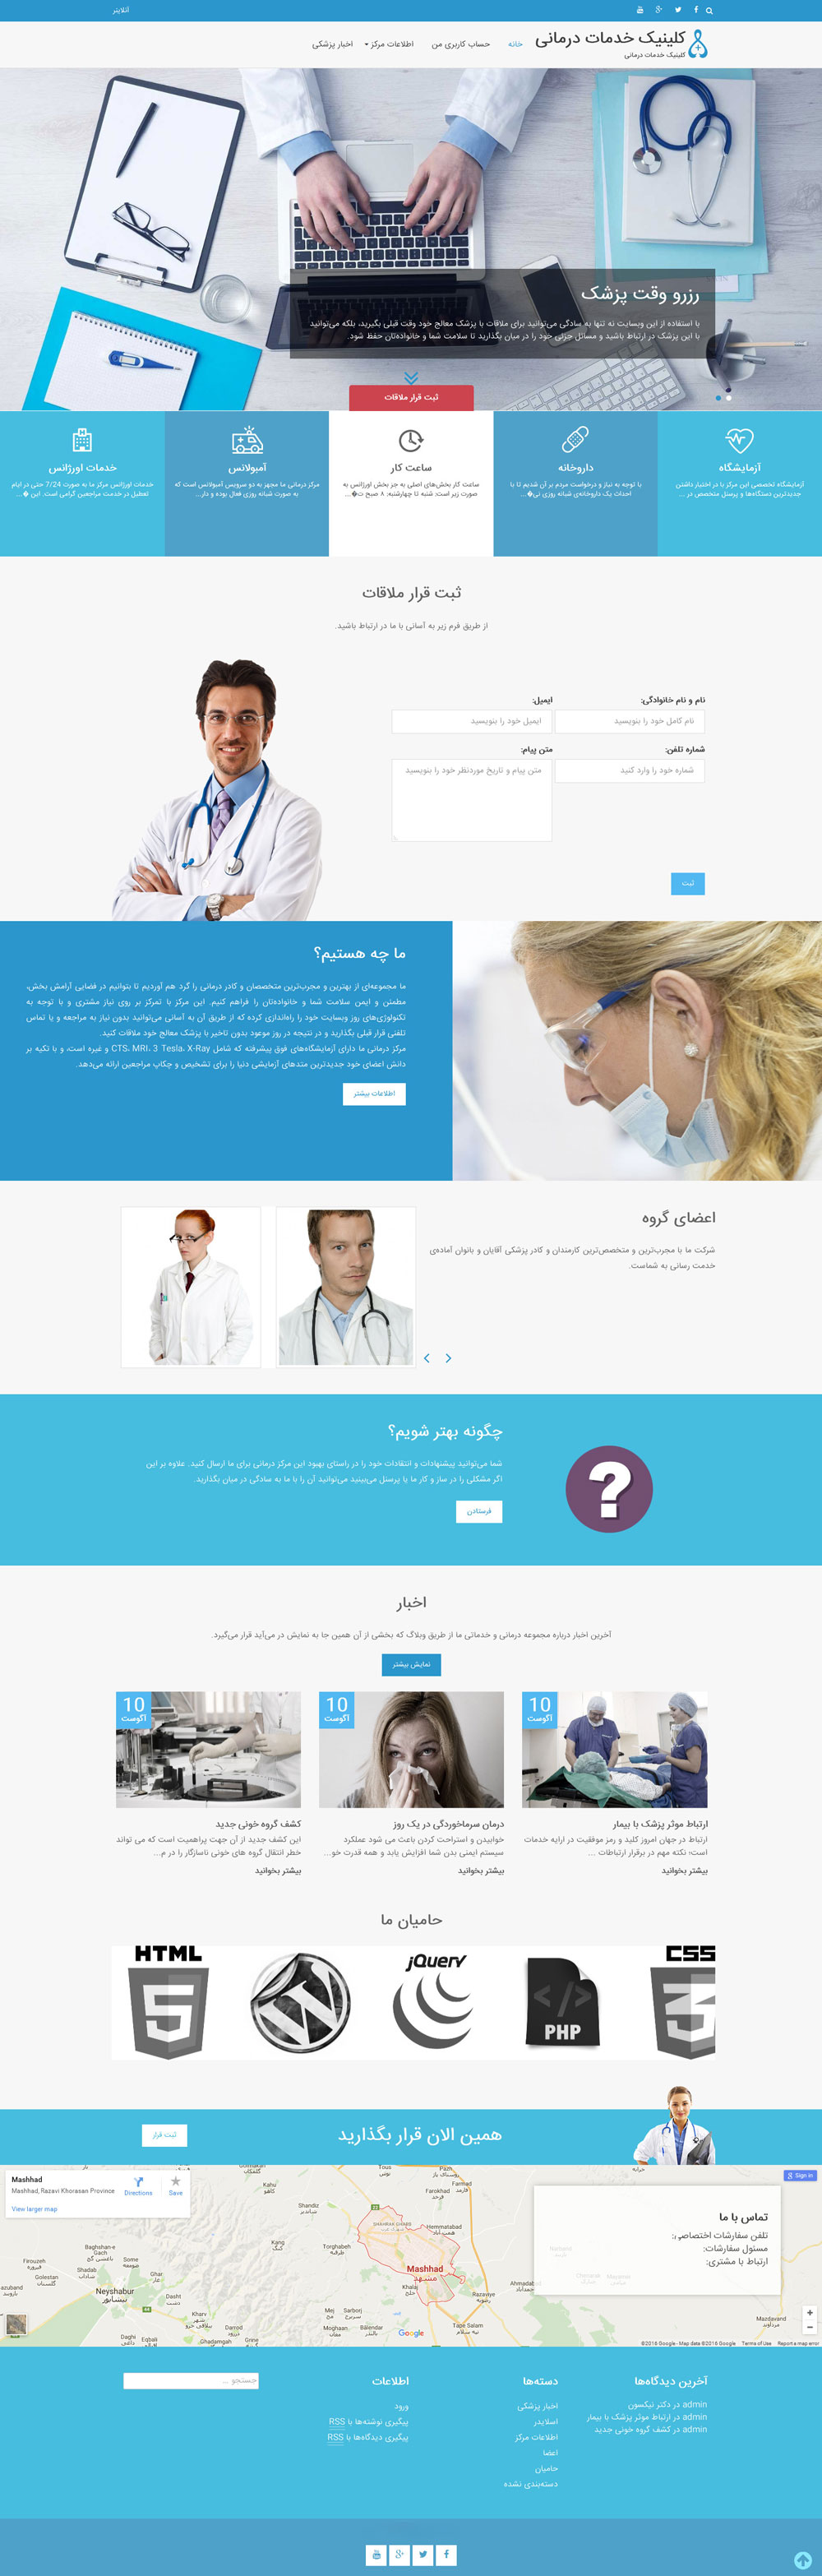 نمونه وب سایت پزشکی دندانپزشکی و کلینیک